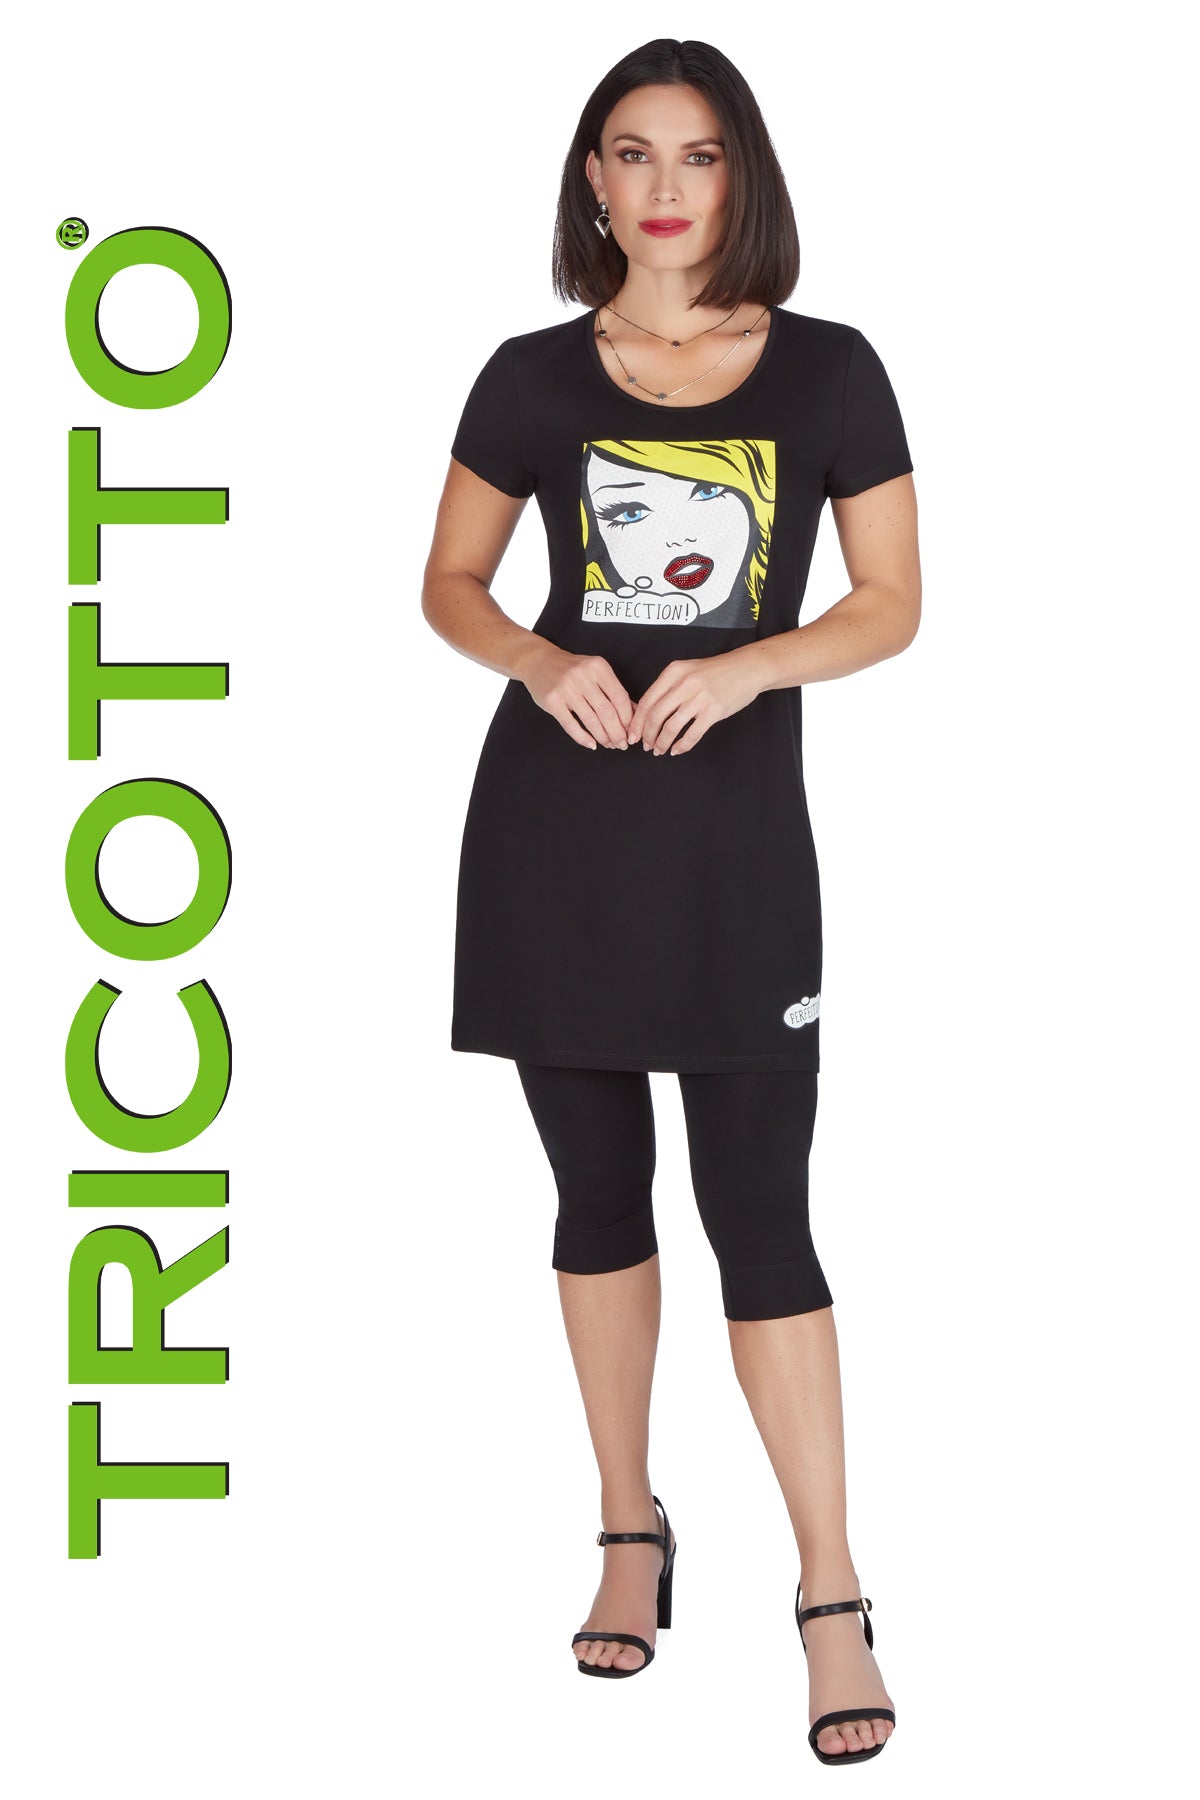 Tricotto Tunics-Buy Tricotto Tunics Online-Tricotto T-shirts-Tricotto Leggings-Tricotto Fashion Montreal-Tricotto Fashion Quebec-Tricotto Online Shop